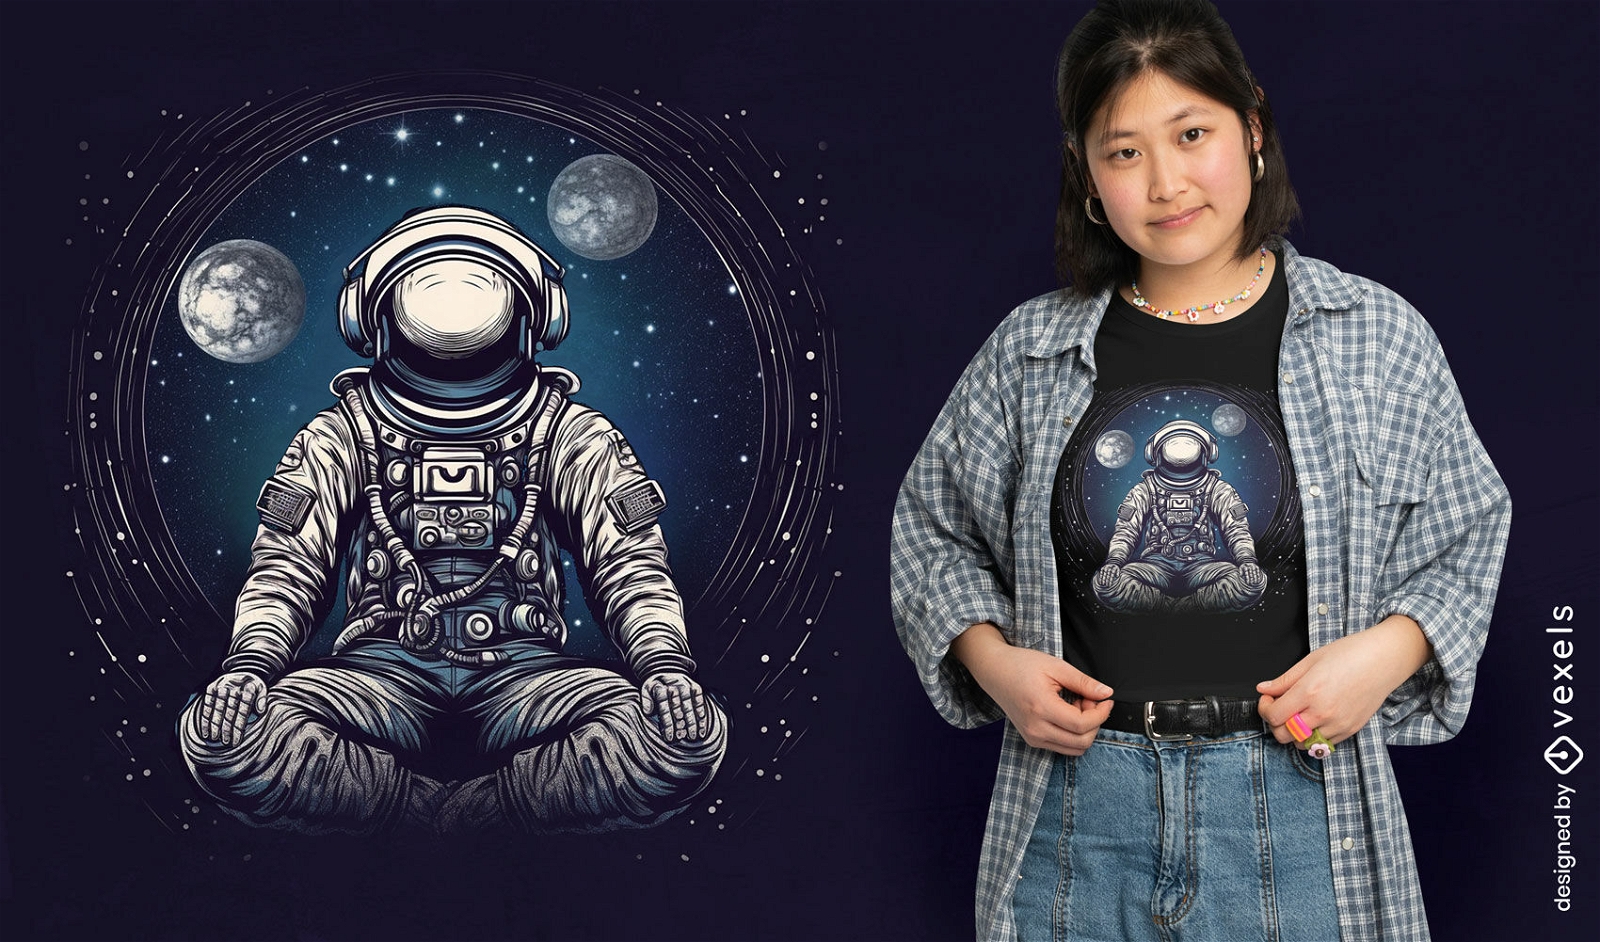 Dise?o de camiseta de astronauta meditando.